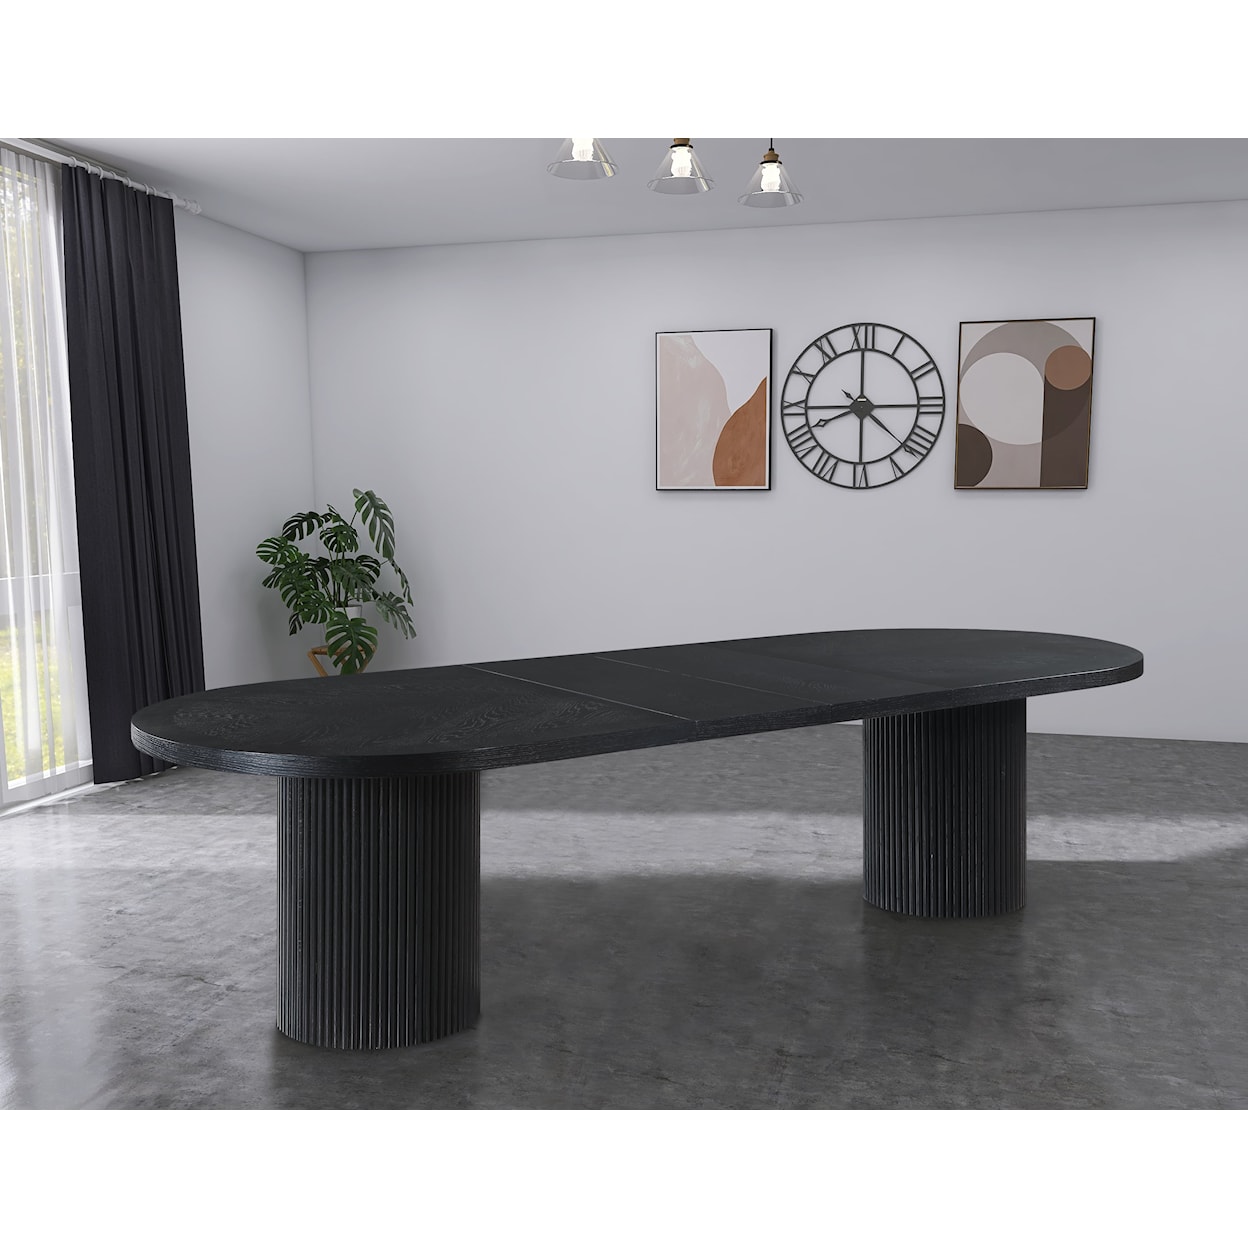 Meridian Furniture Belinda Black Oak Dining Table with Table Leaves